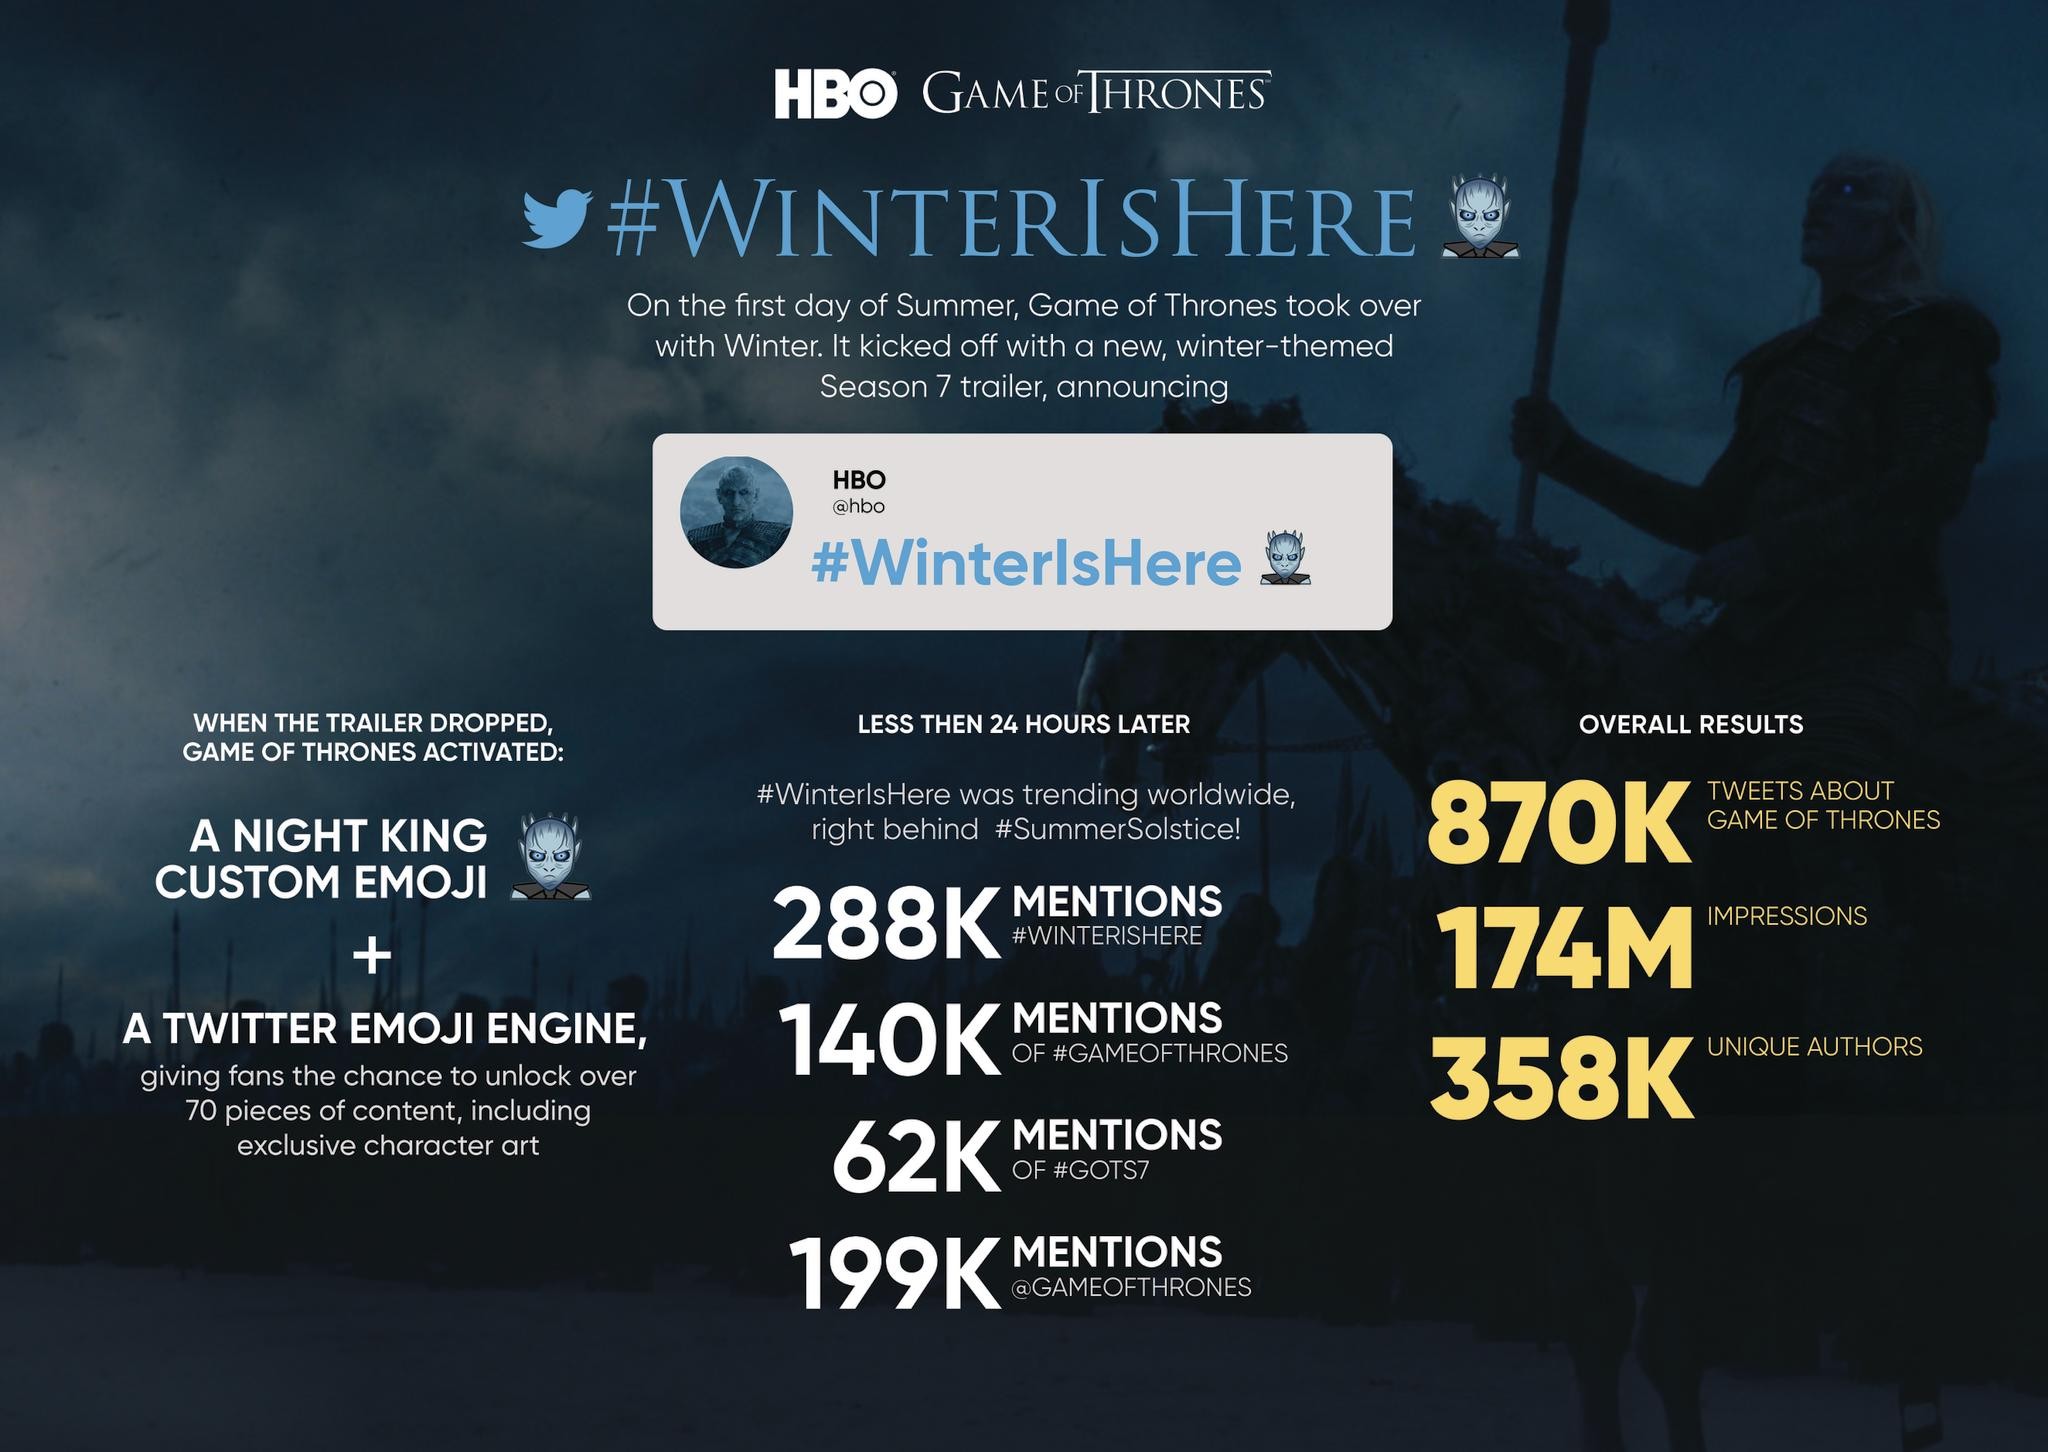 Game of Thrones: Twitter Emoji Engine